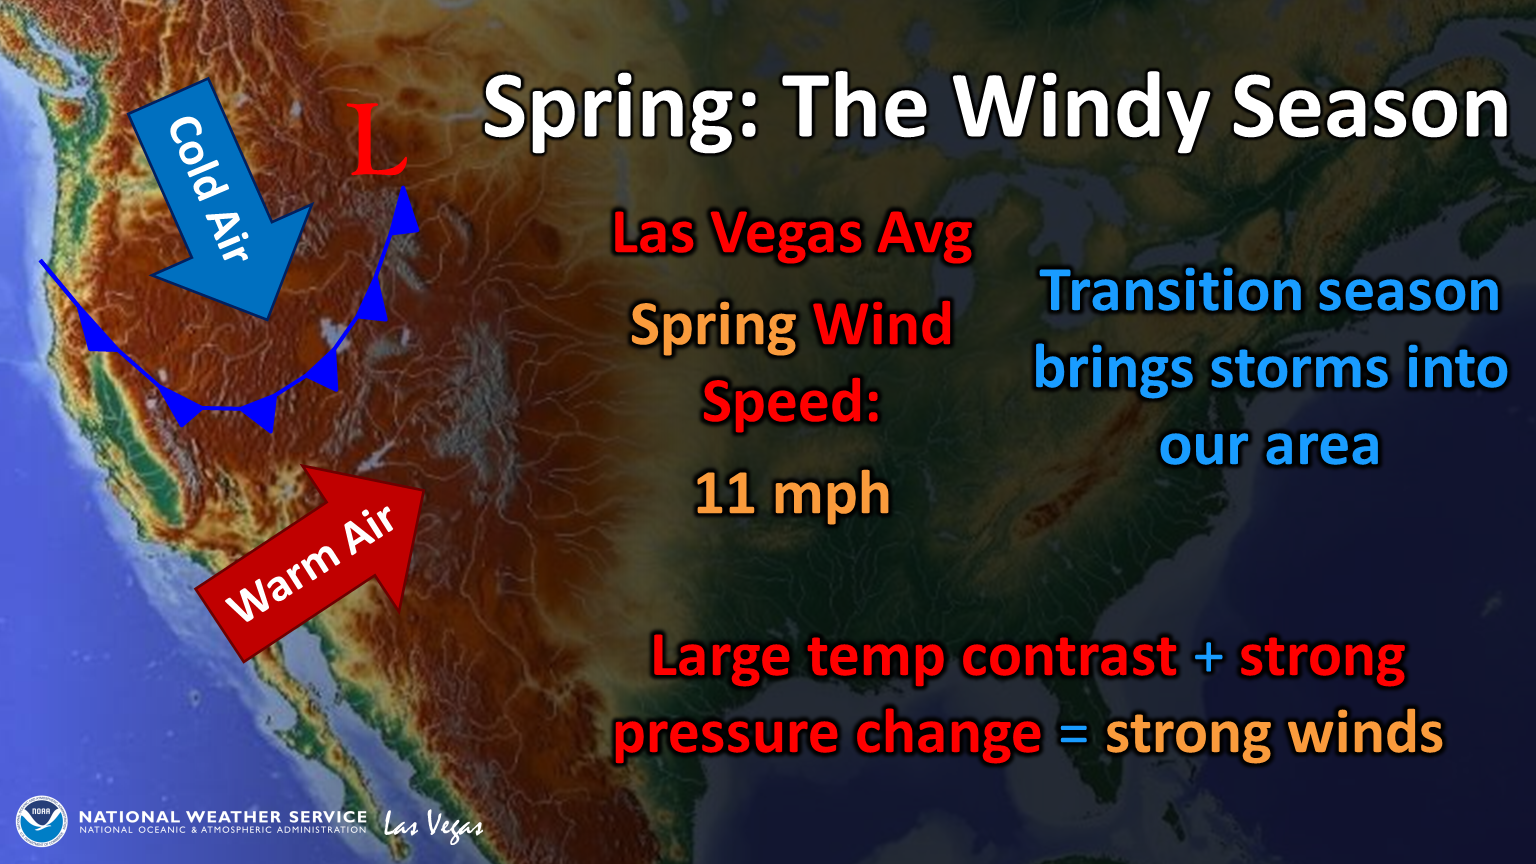 Windy Season Graphic.png